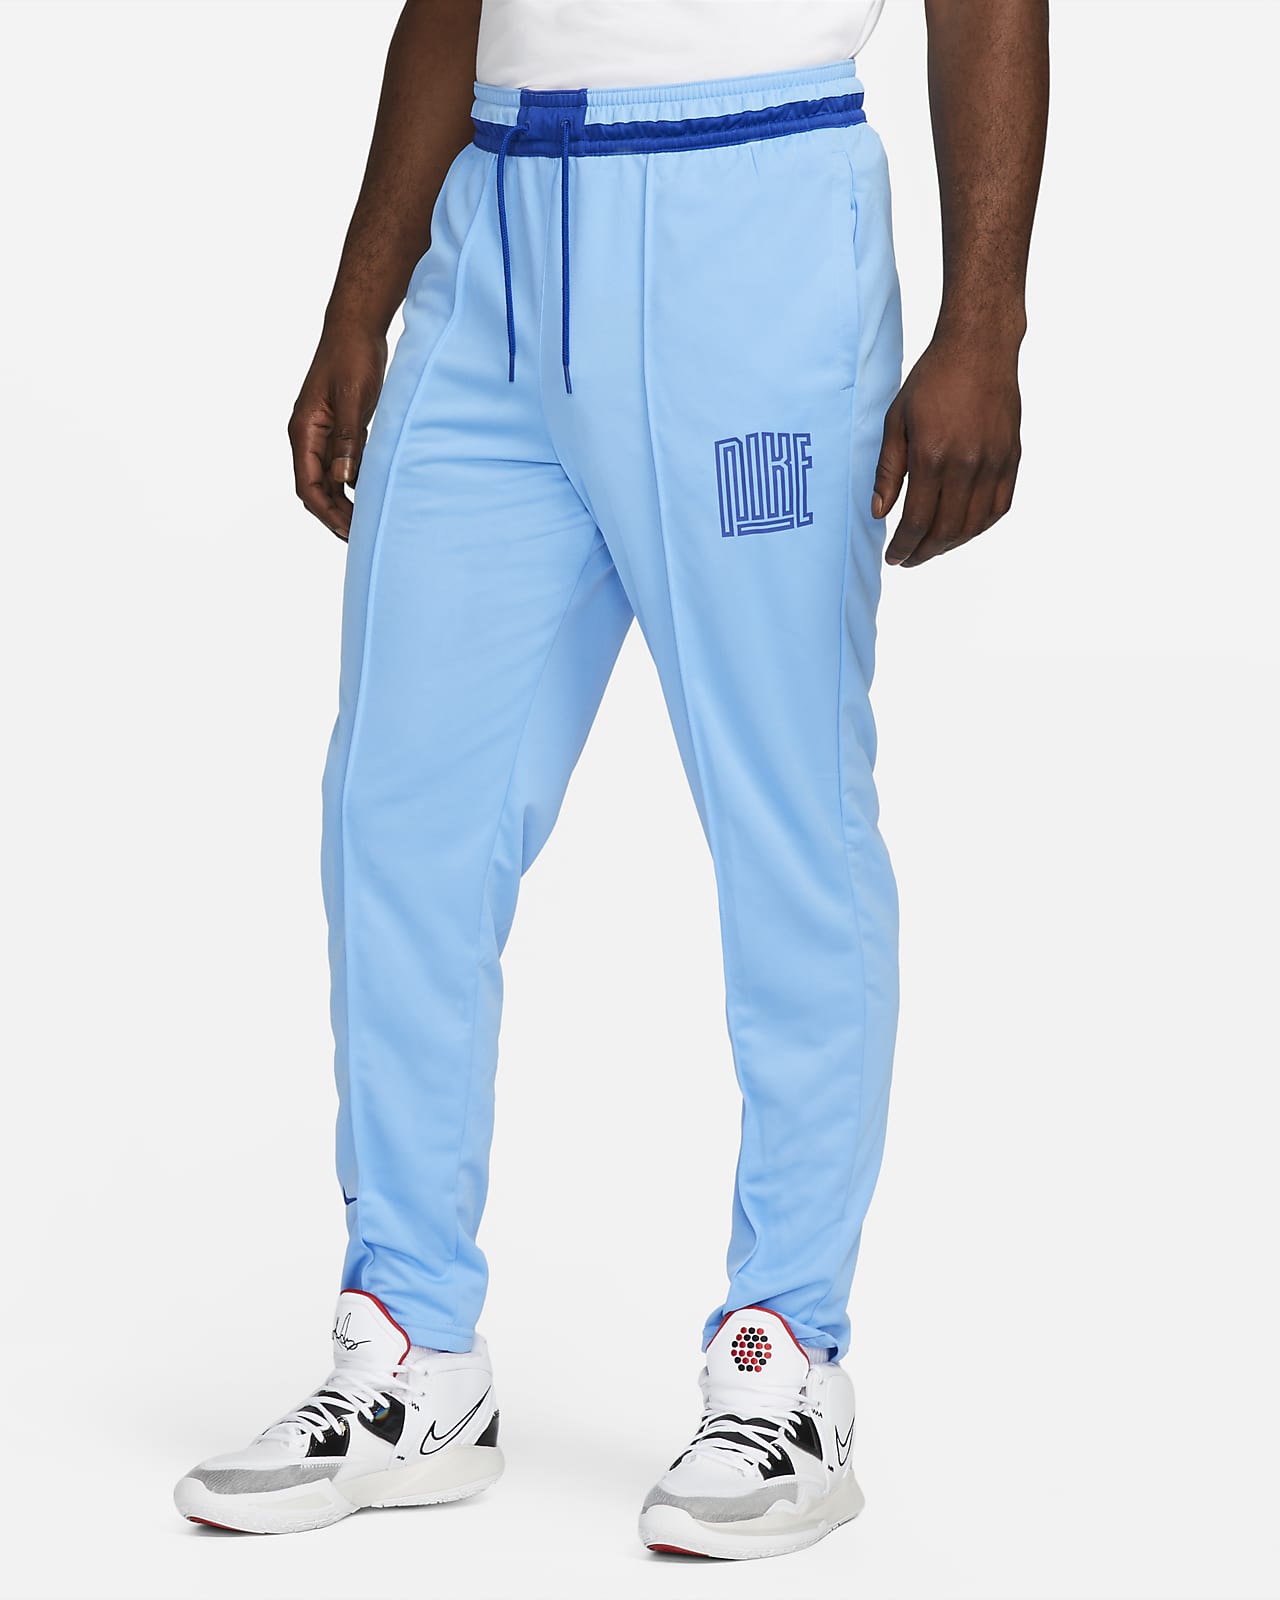 Nike Dri-FIT Men's Basketball Pants